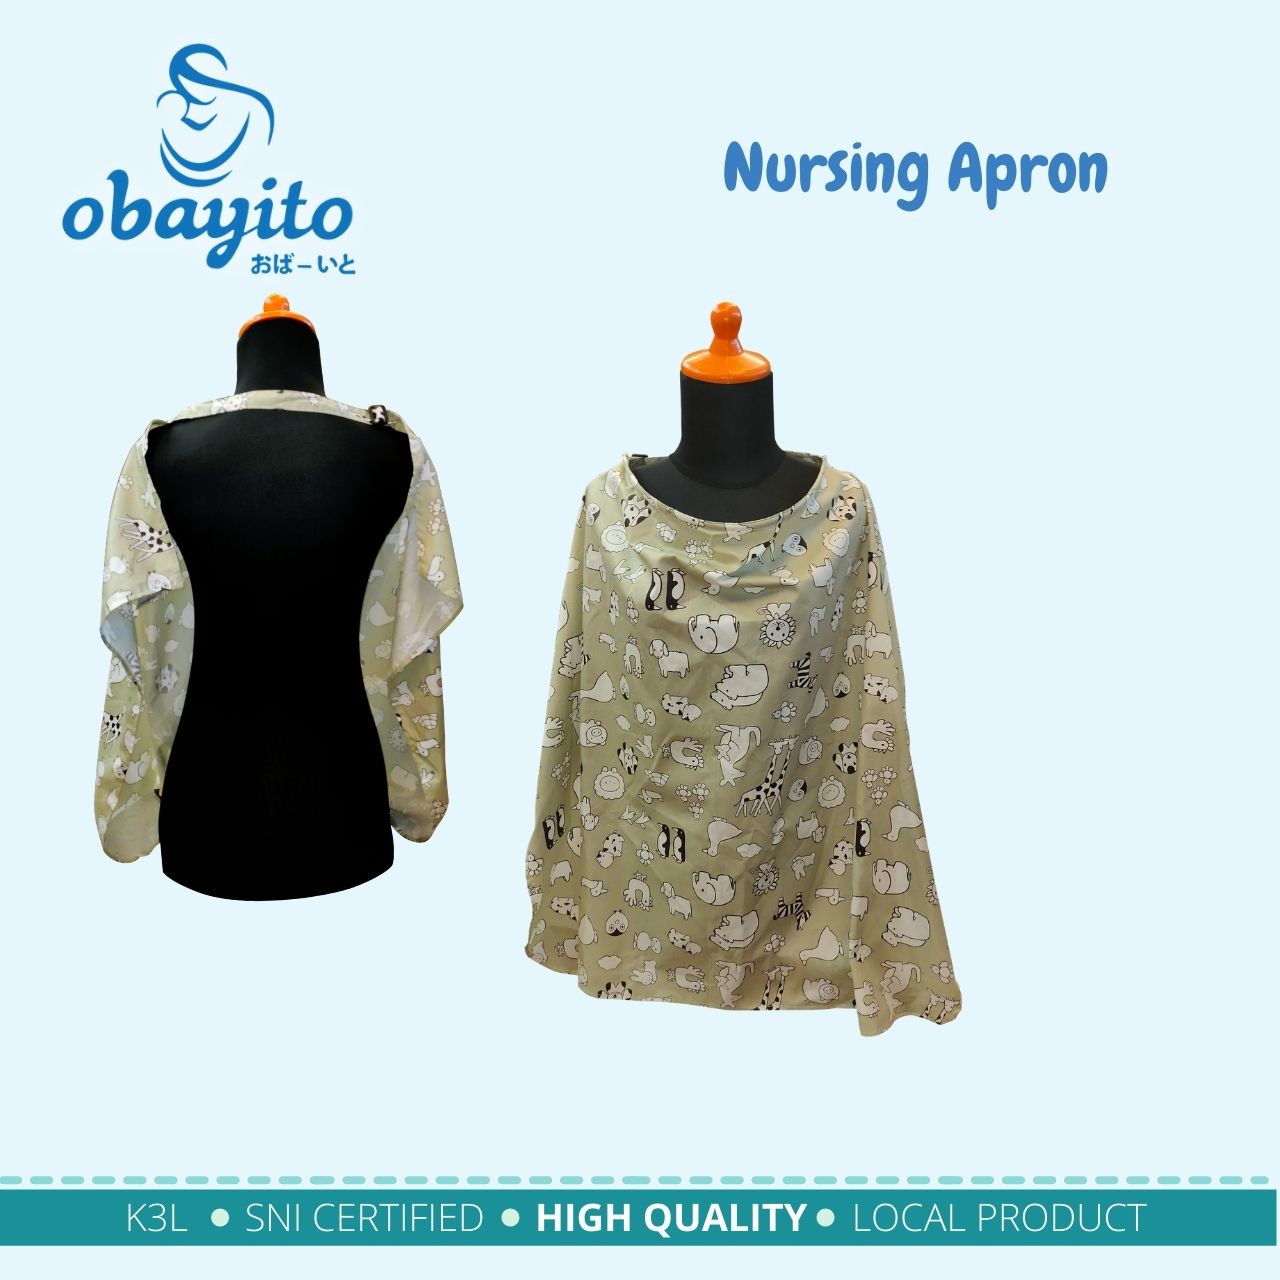 Nursing Apron Obayito